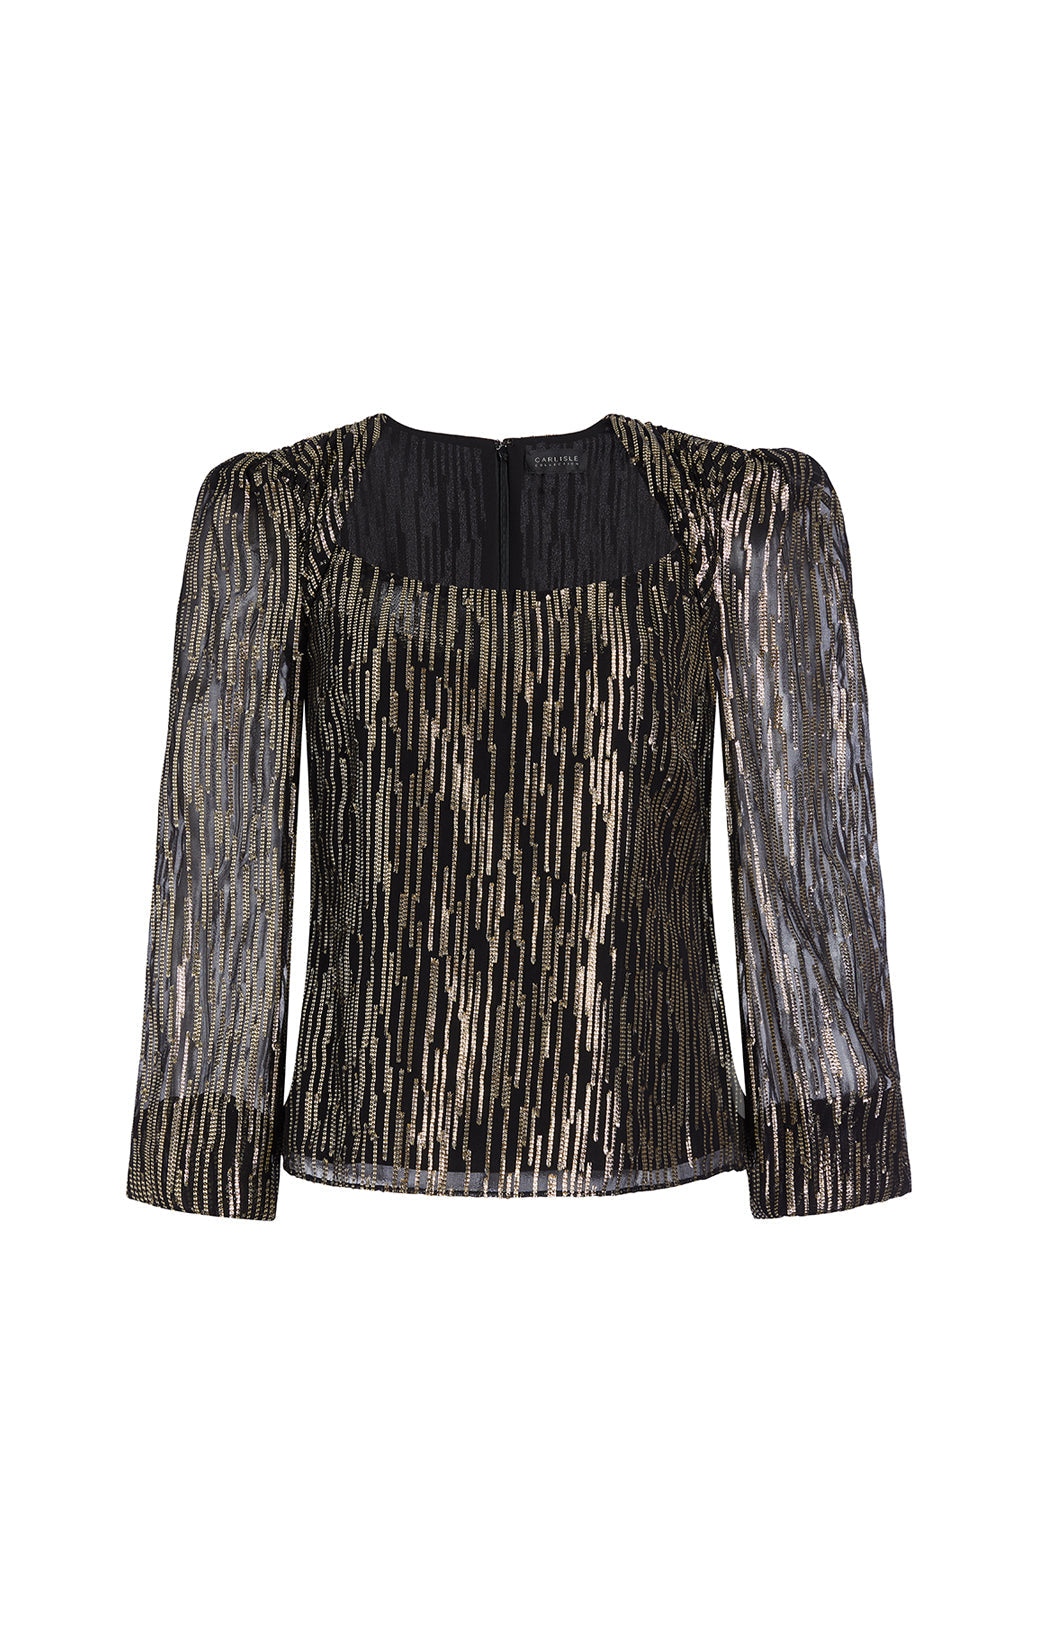 Gala - Skirt With Metallic Gold Stripe Jacquard -  Product Image